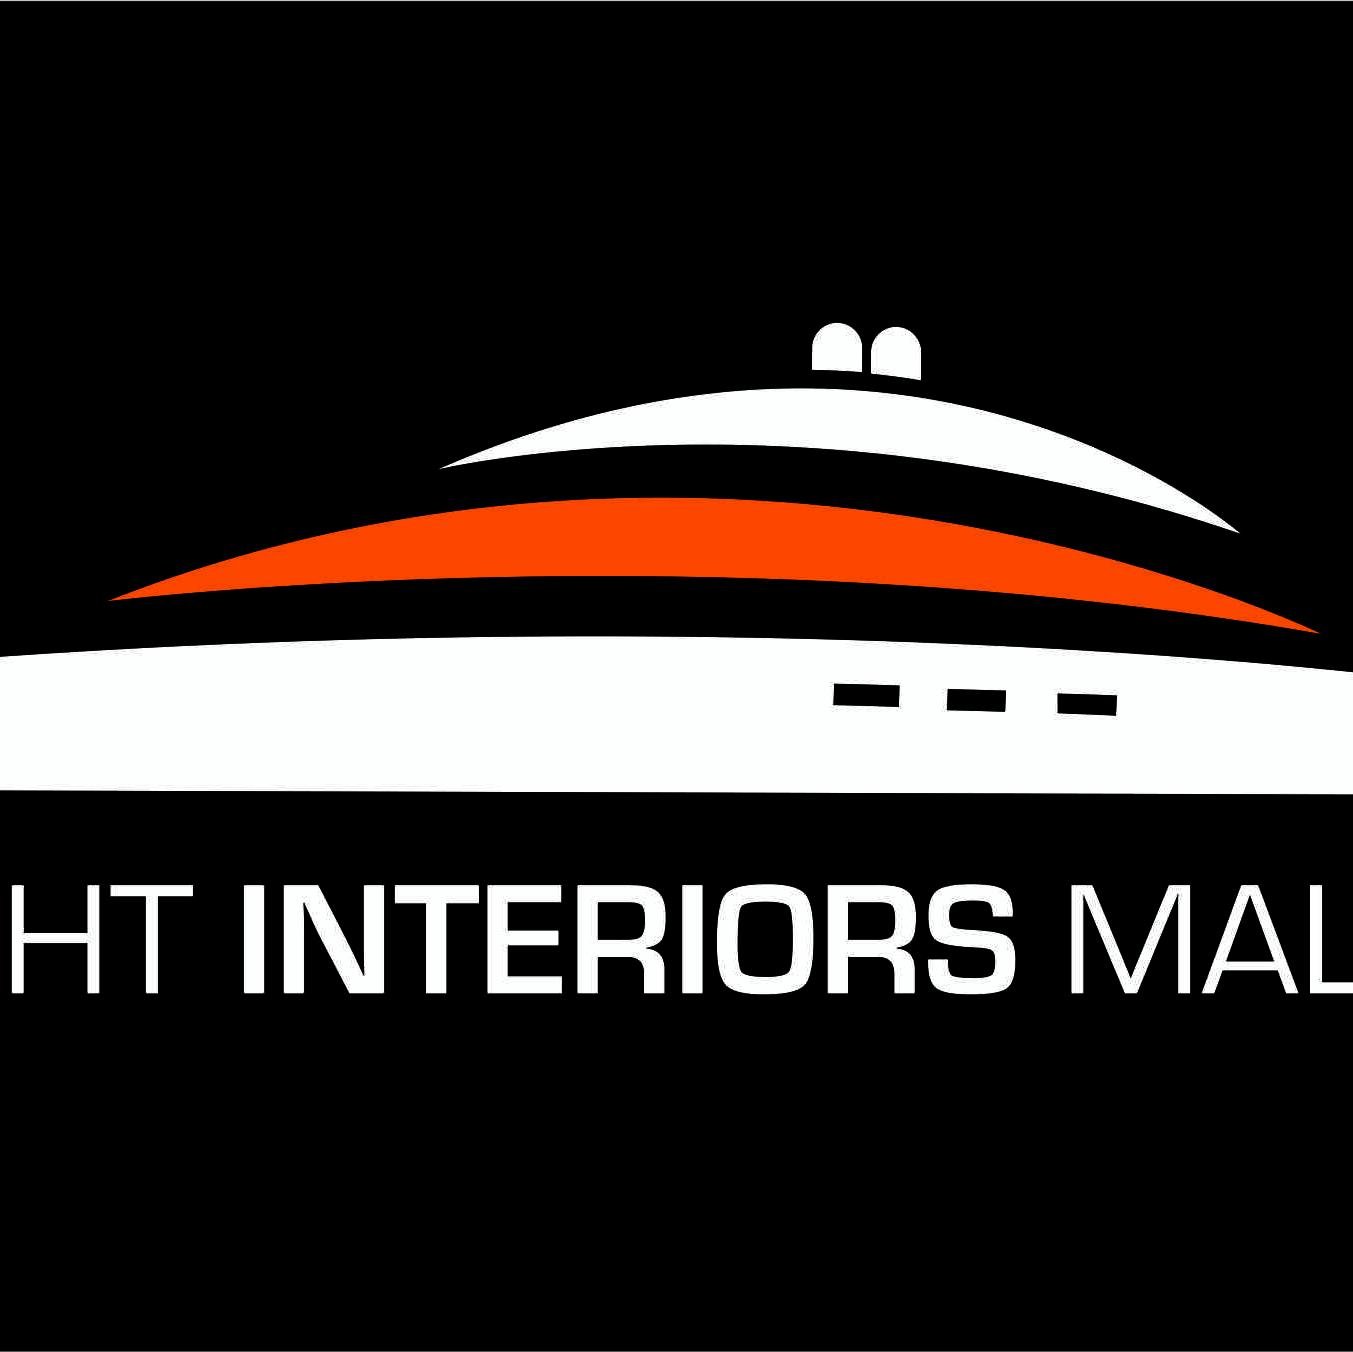 Superyacht Interiors Mallorca is an interior/exterior furnishings & refit company who design,produce & supply to the superyacht market in Palma de Mallorca.